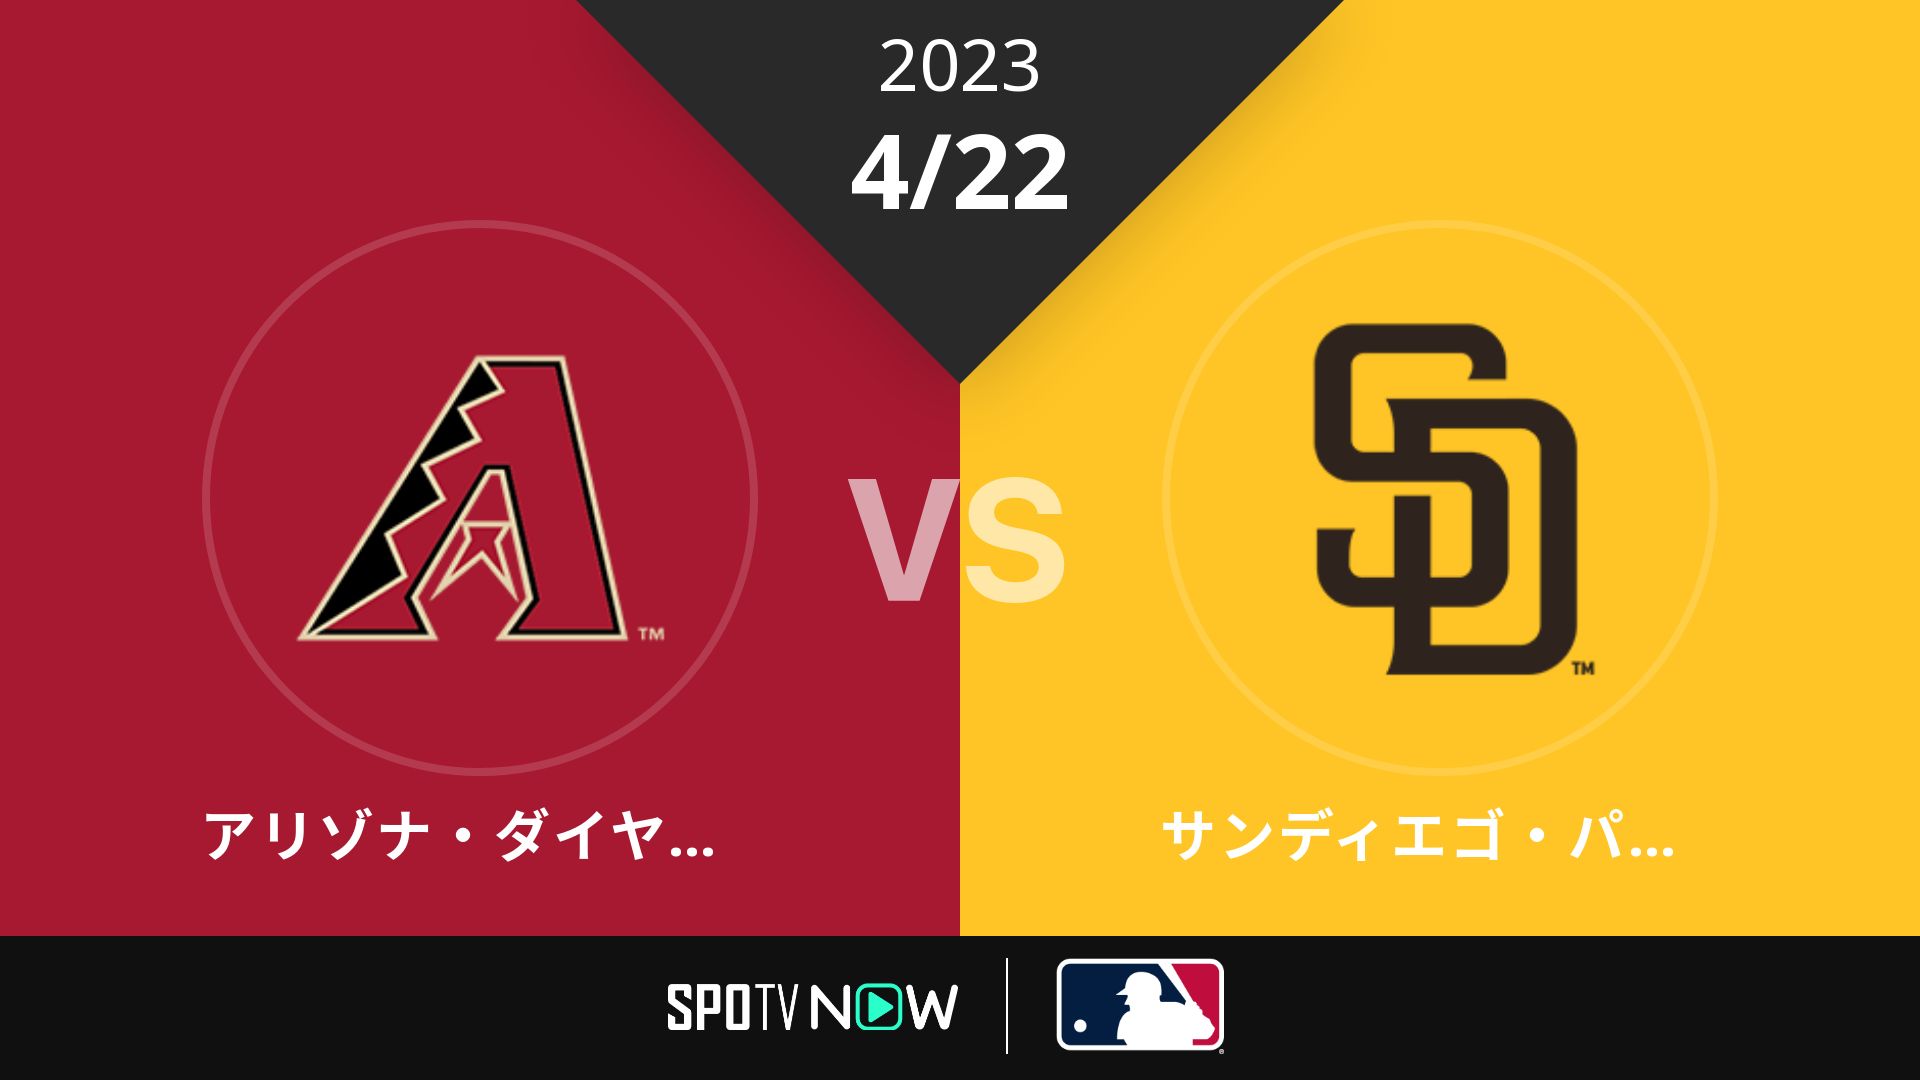 2023/4/22 Dバックス vs パドレス [MLB]